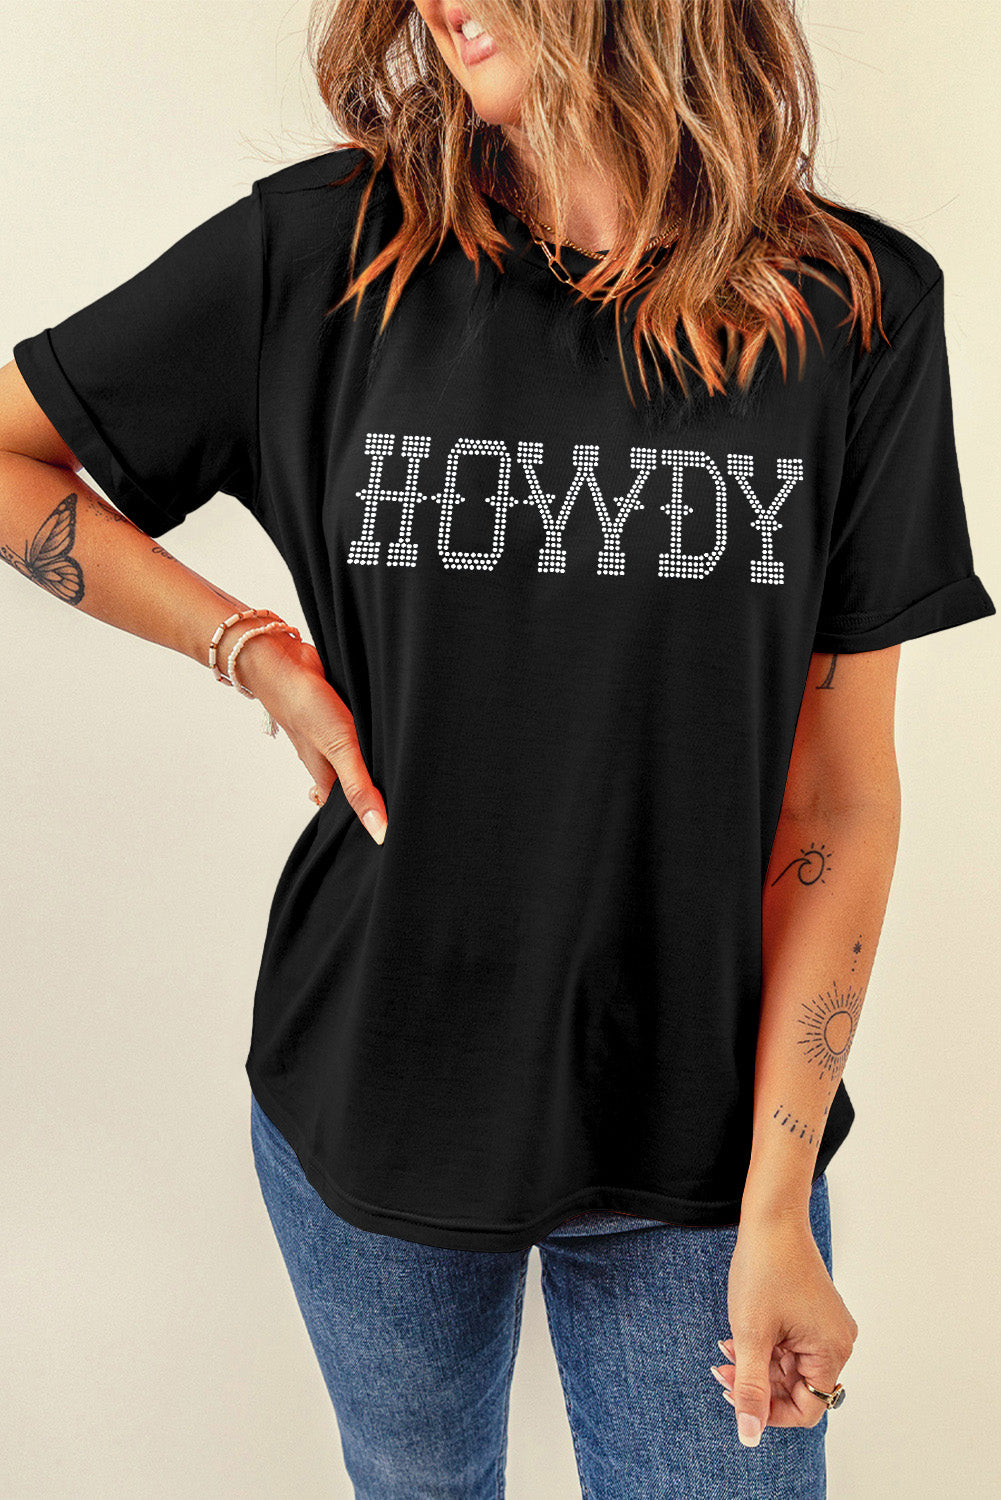 Black Rhinestone HOWDY Graphic Slim Fit Crew Neck T Shirt